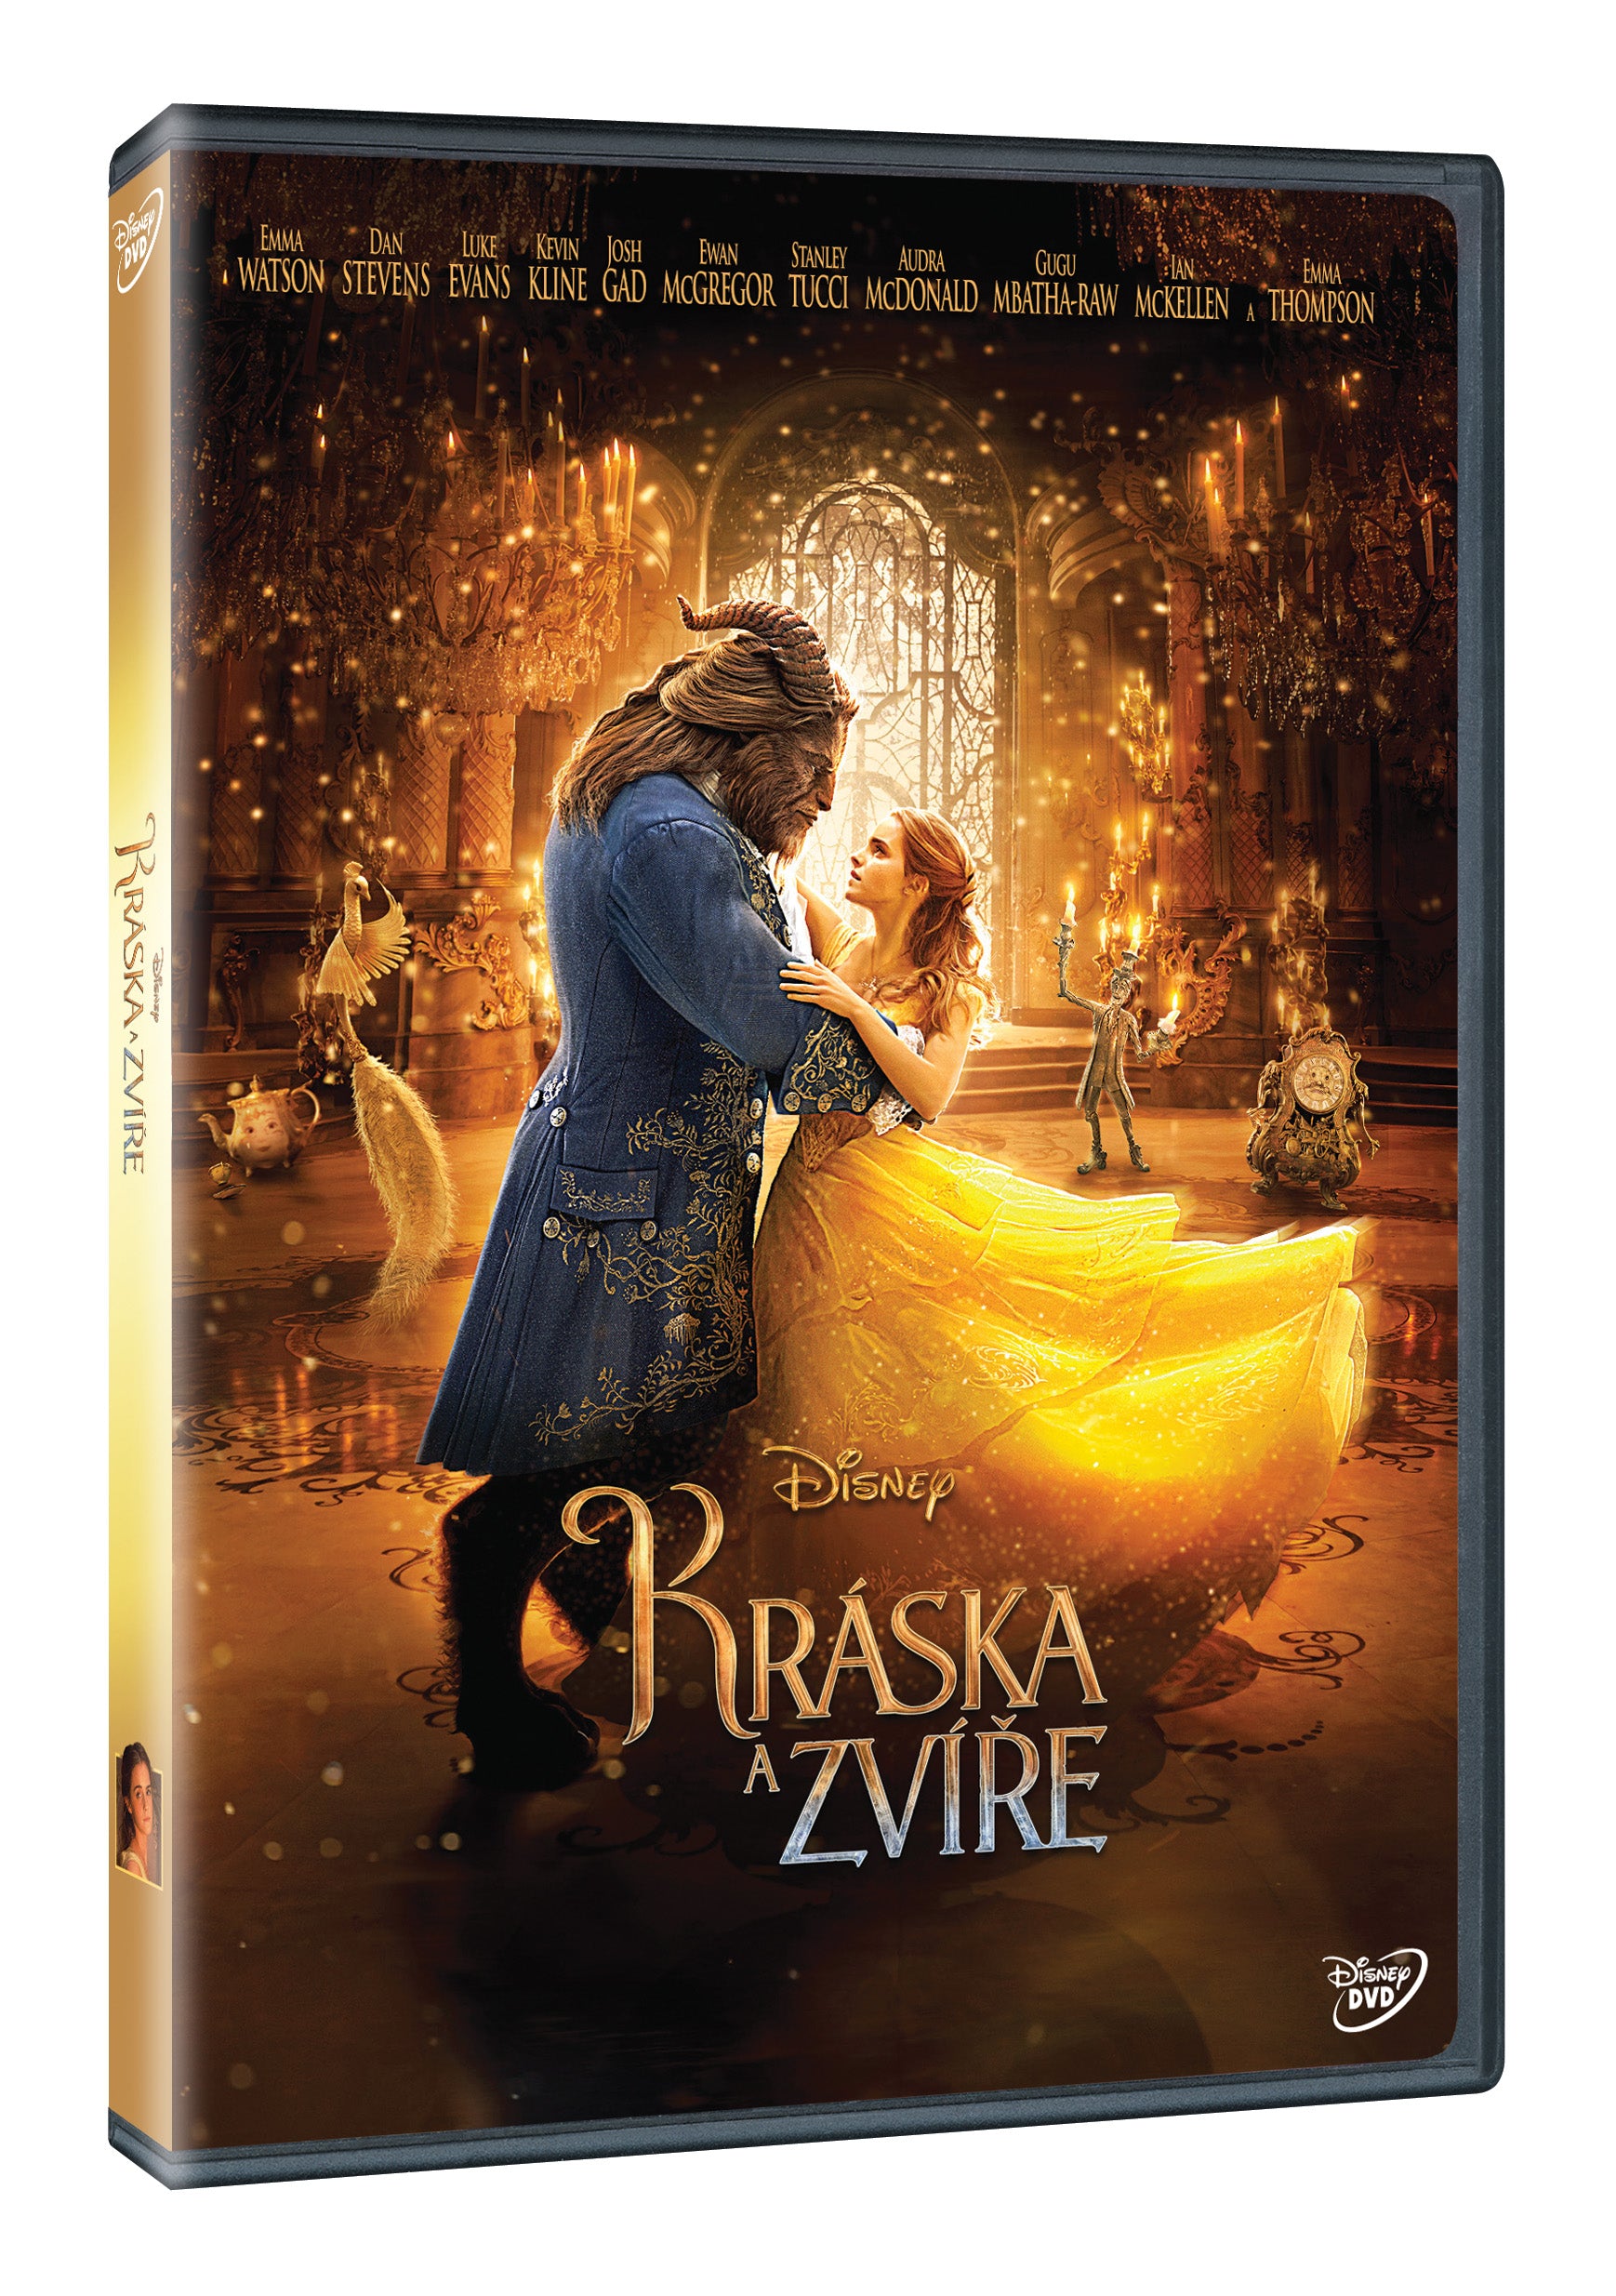 Kraska a zvire DVD / Beauty and the Beast